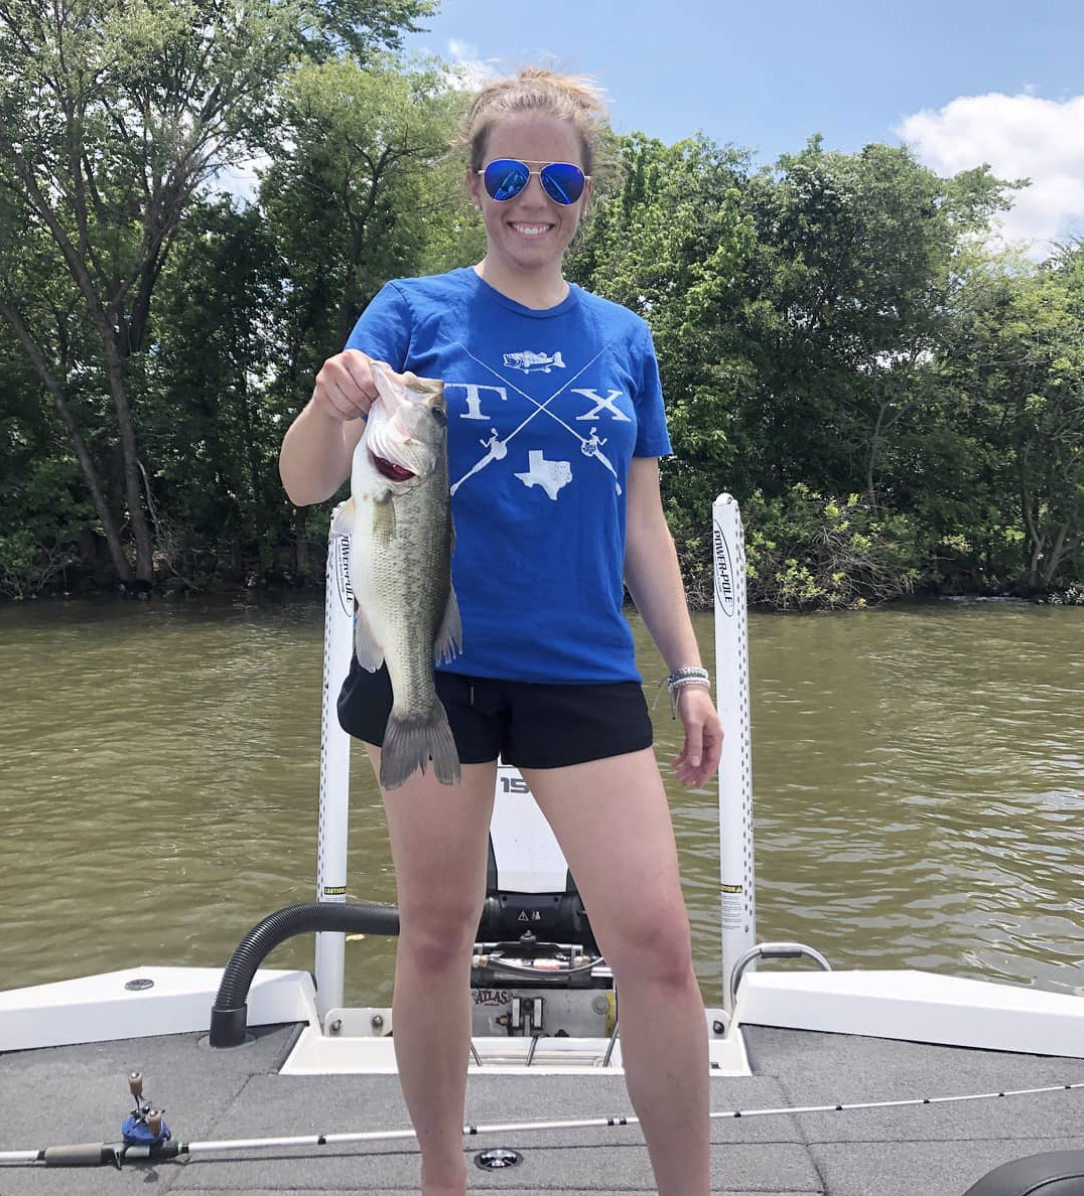 Texas Fishing Shirt, Shirt Bass Fish, Tshirt Largemouth Bass